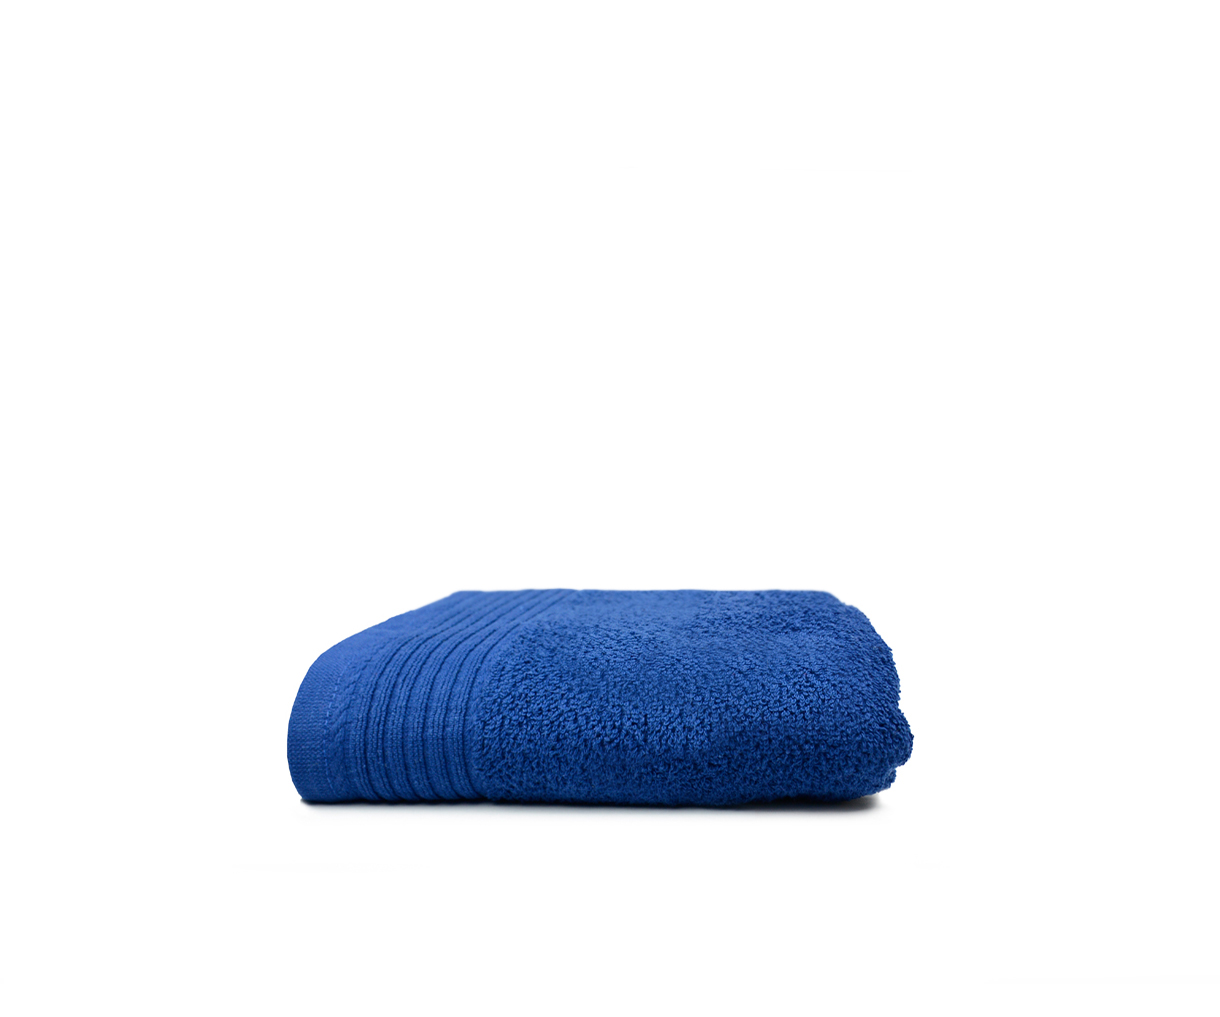 Handdoek Marineblauw